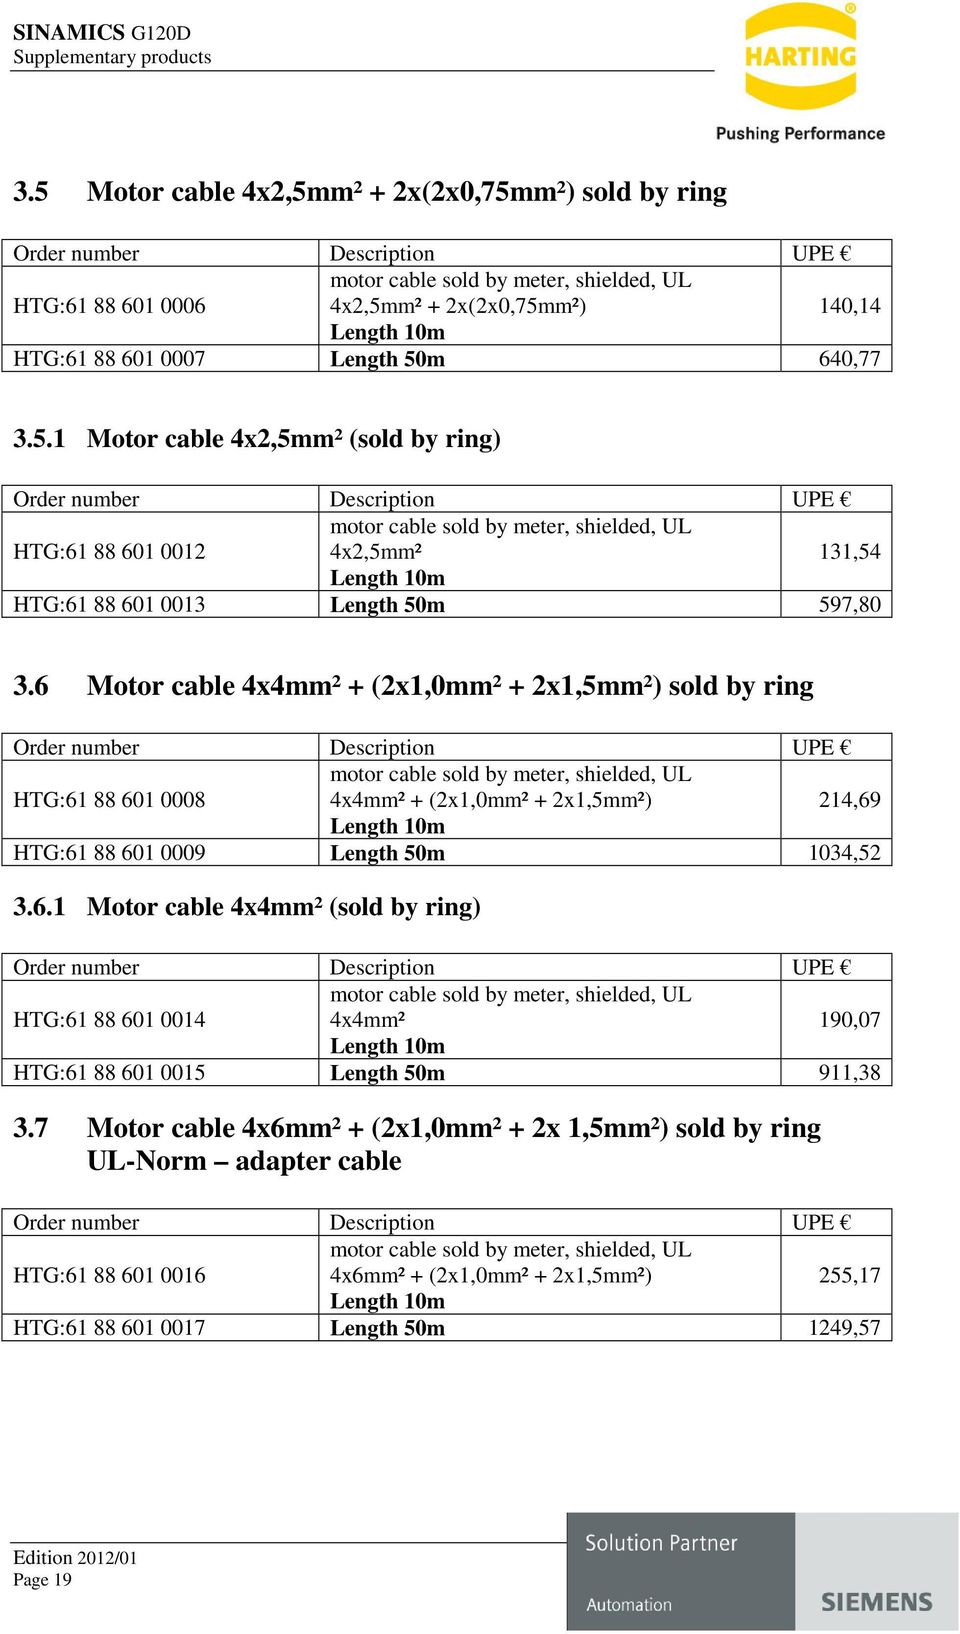 6 Motor cable 4x4mm² + (2x1,0mm² + 2x1,5mm²) sold by ring HTG:61 88 601 0008 motor cable sold by meter, shielded, UL 4x4mm² + (2x1,0mm² + 2x1,5mm²) 214,69 Length 10m HTG:61 88 601 0009 Length 50m